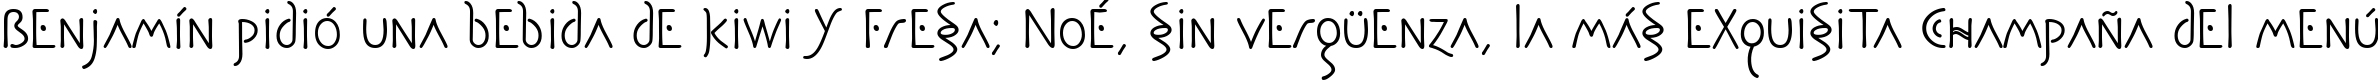 Пример написания шрифтом Pegasus текста на испанском